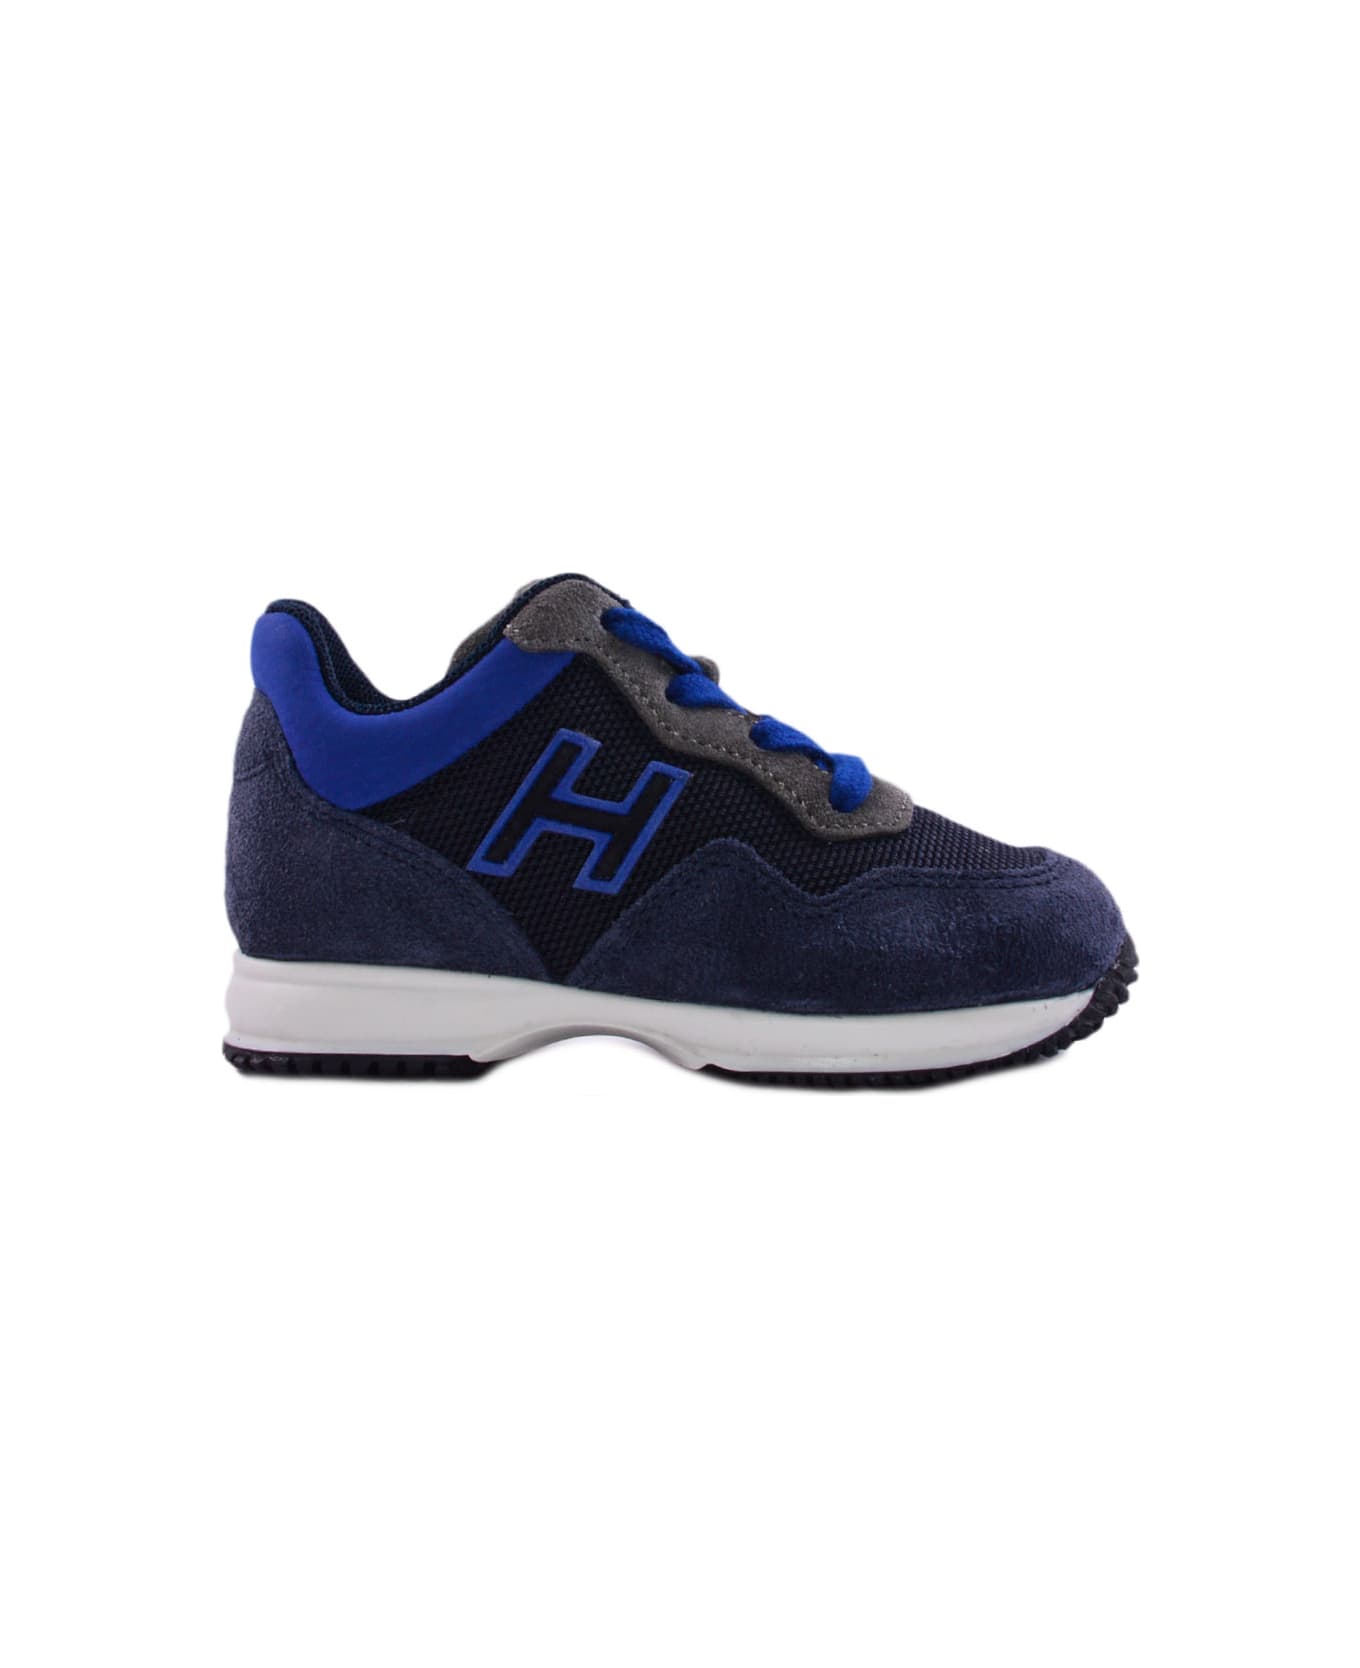 Hogan Interactive Suede Shoes - Blue